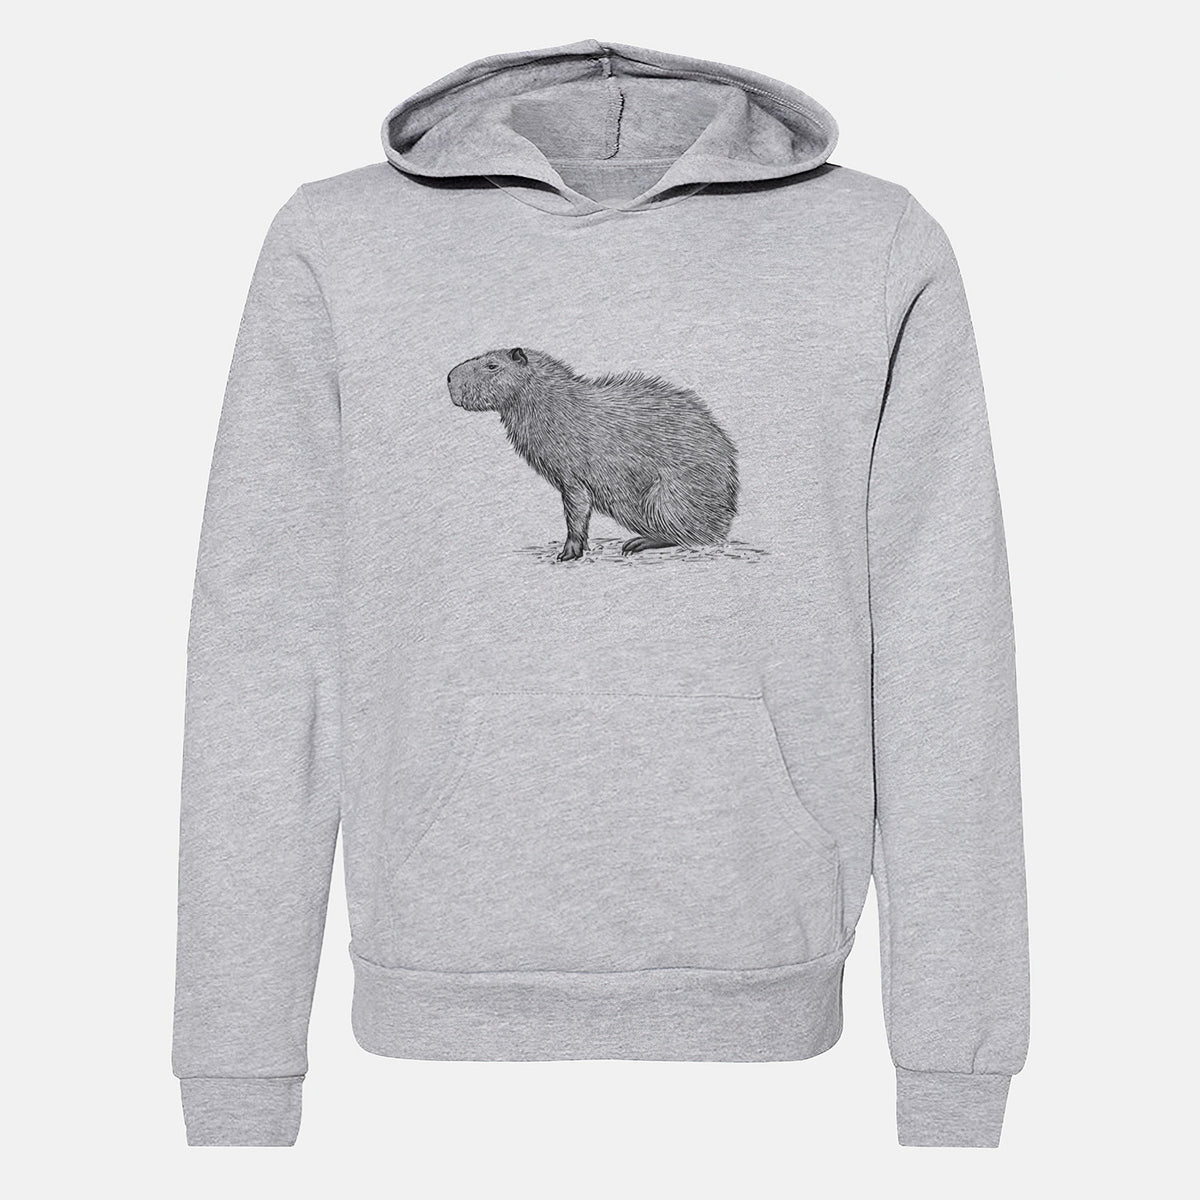 Capybara Profile - Hydrochoerus hydrochaeris - Youth Hoodie Sweatshirt